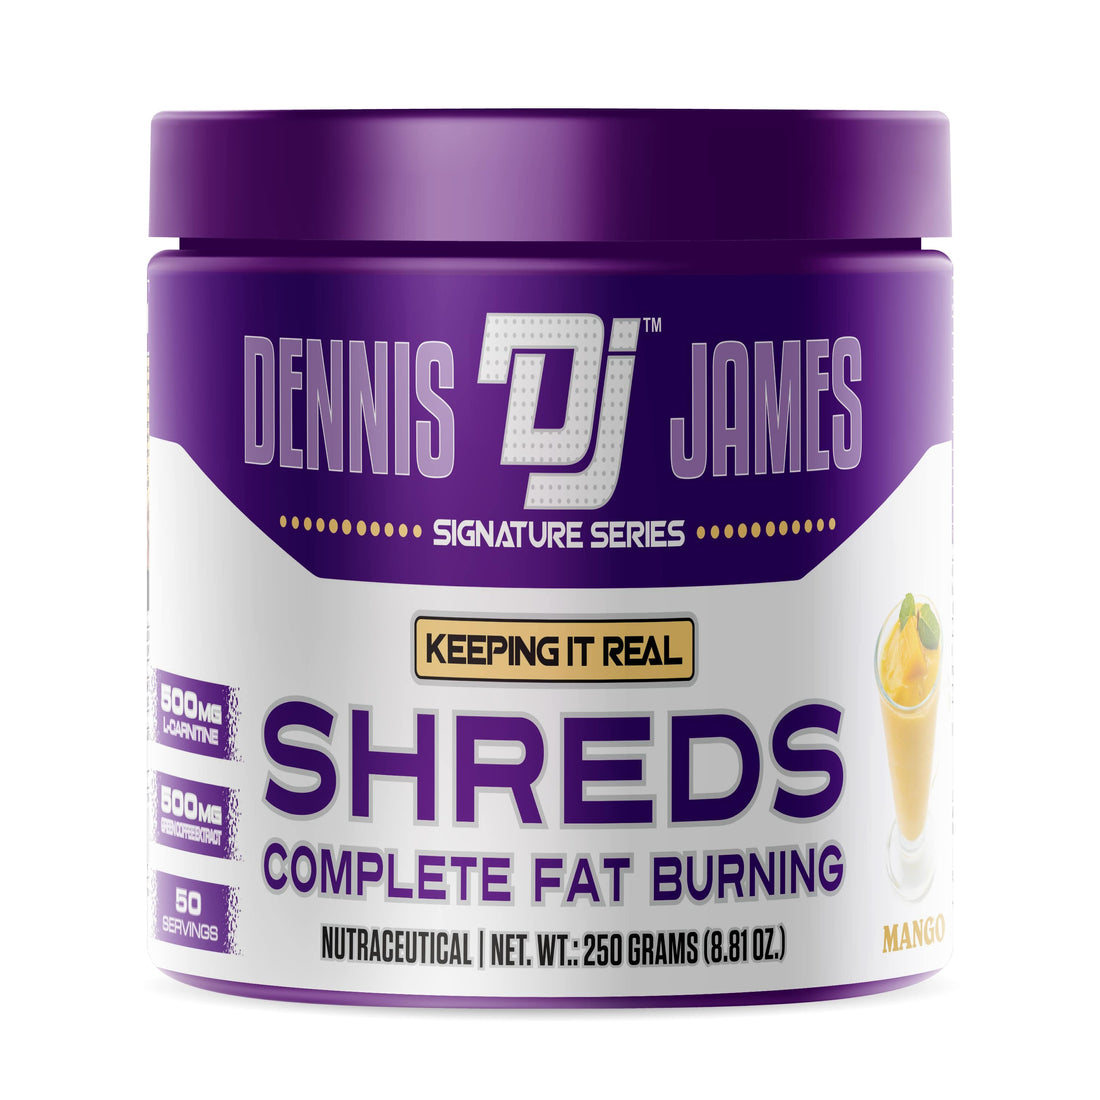 Dennis James Signature Series Shreds Complete Fat Burning